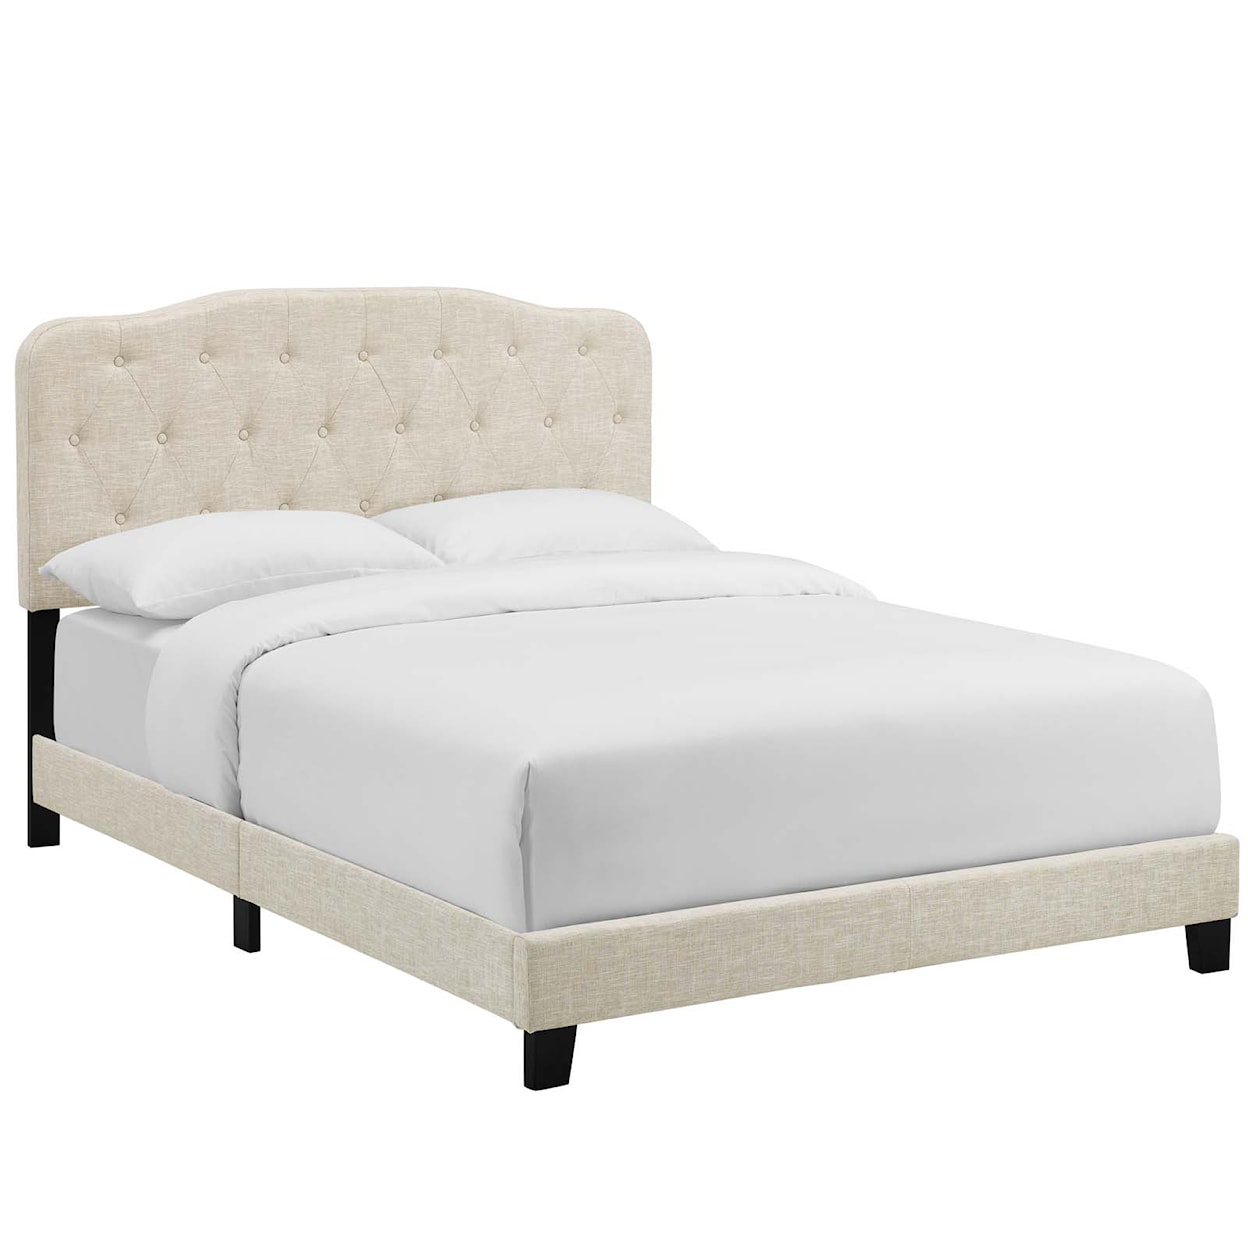 Modway Amelia King Upholstered Bed